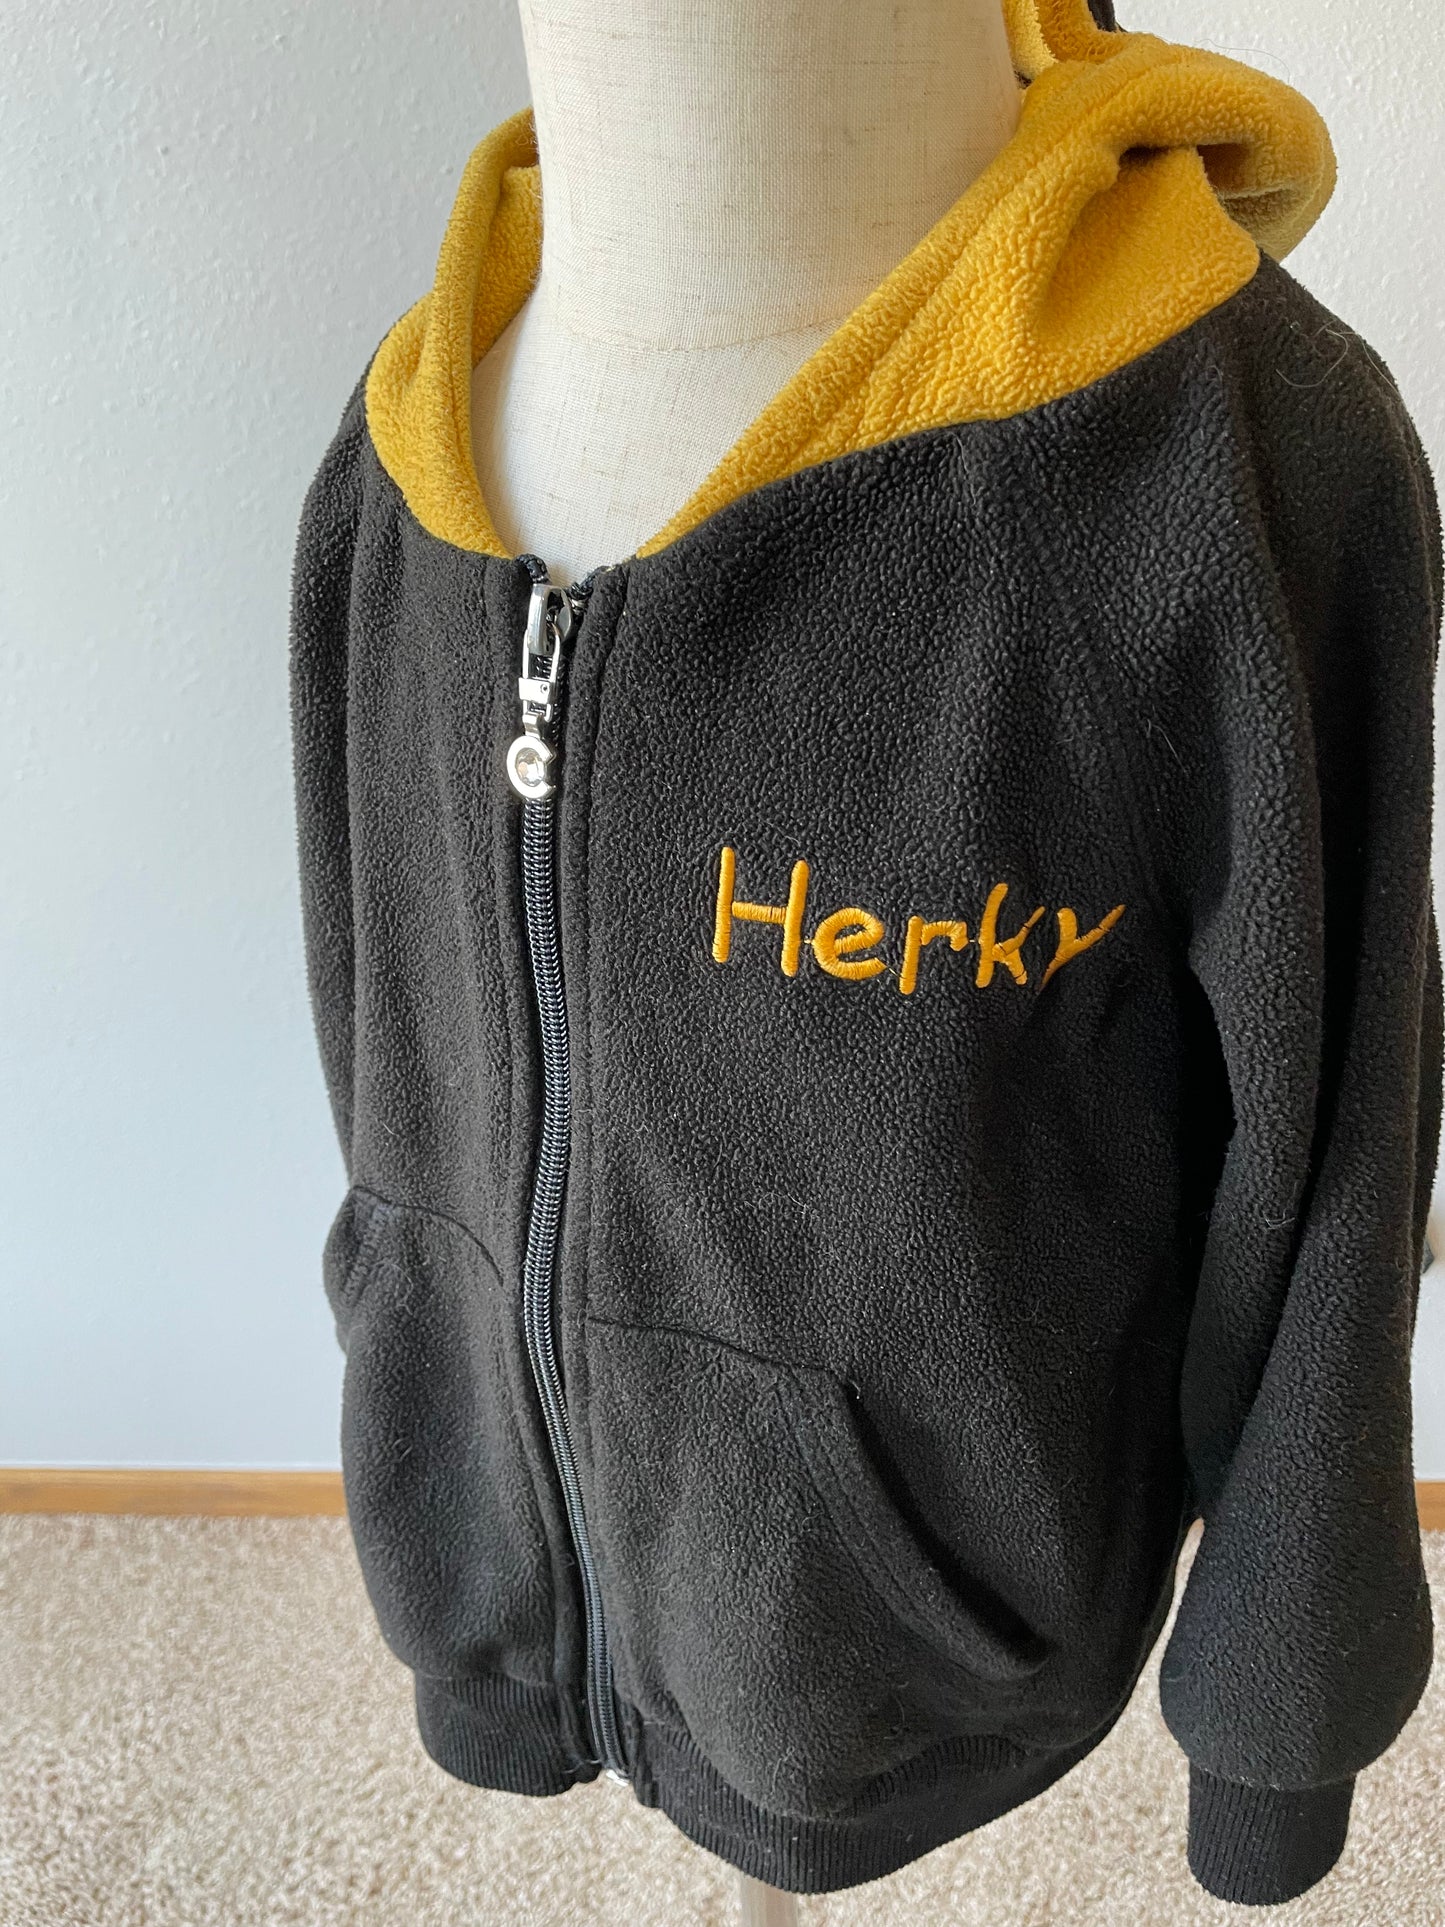 Huddle-Up Herkey Hooded Sweatshirt (2T-4T)